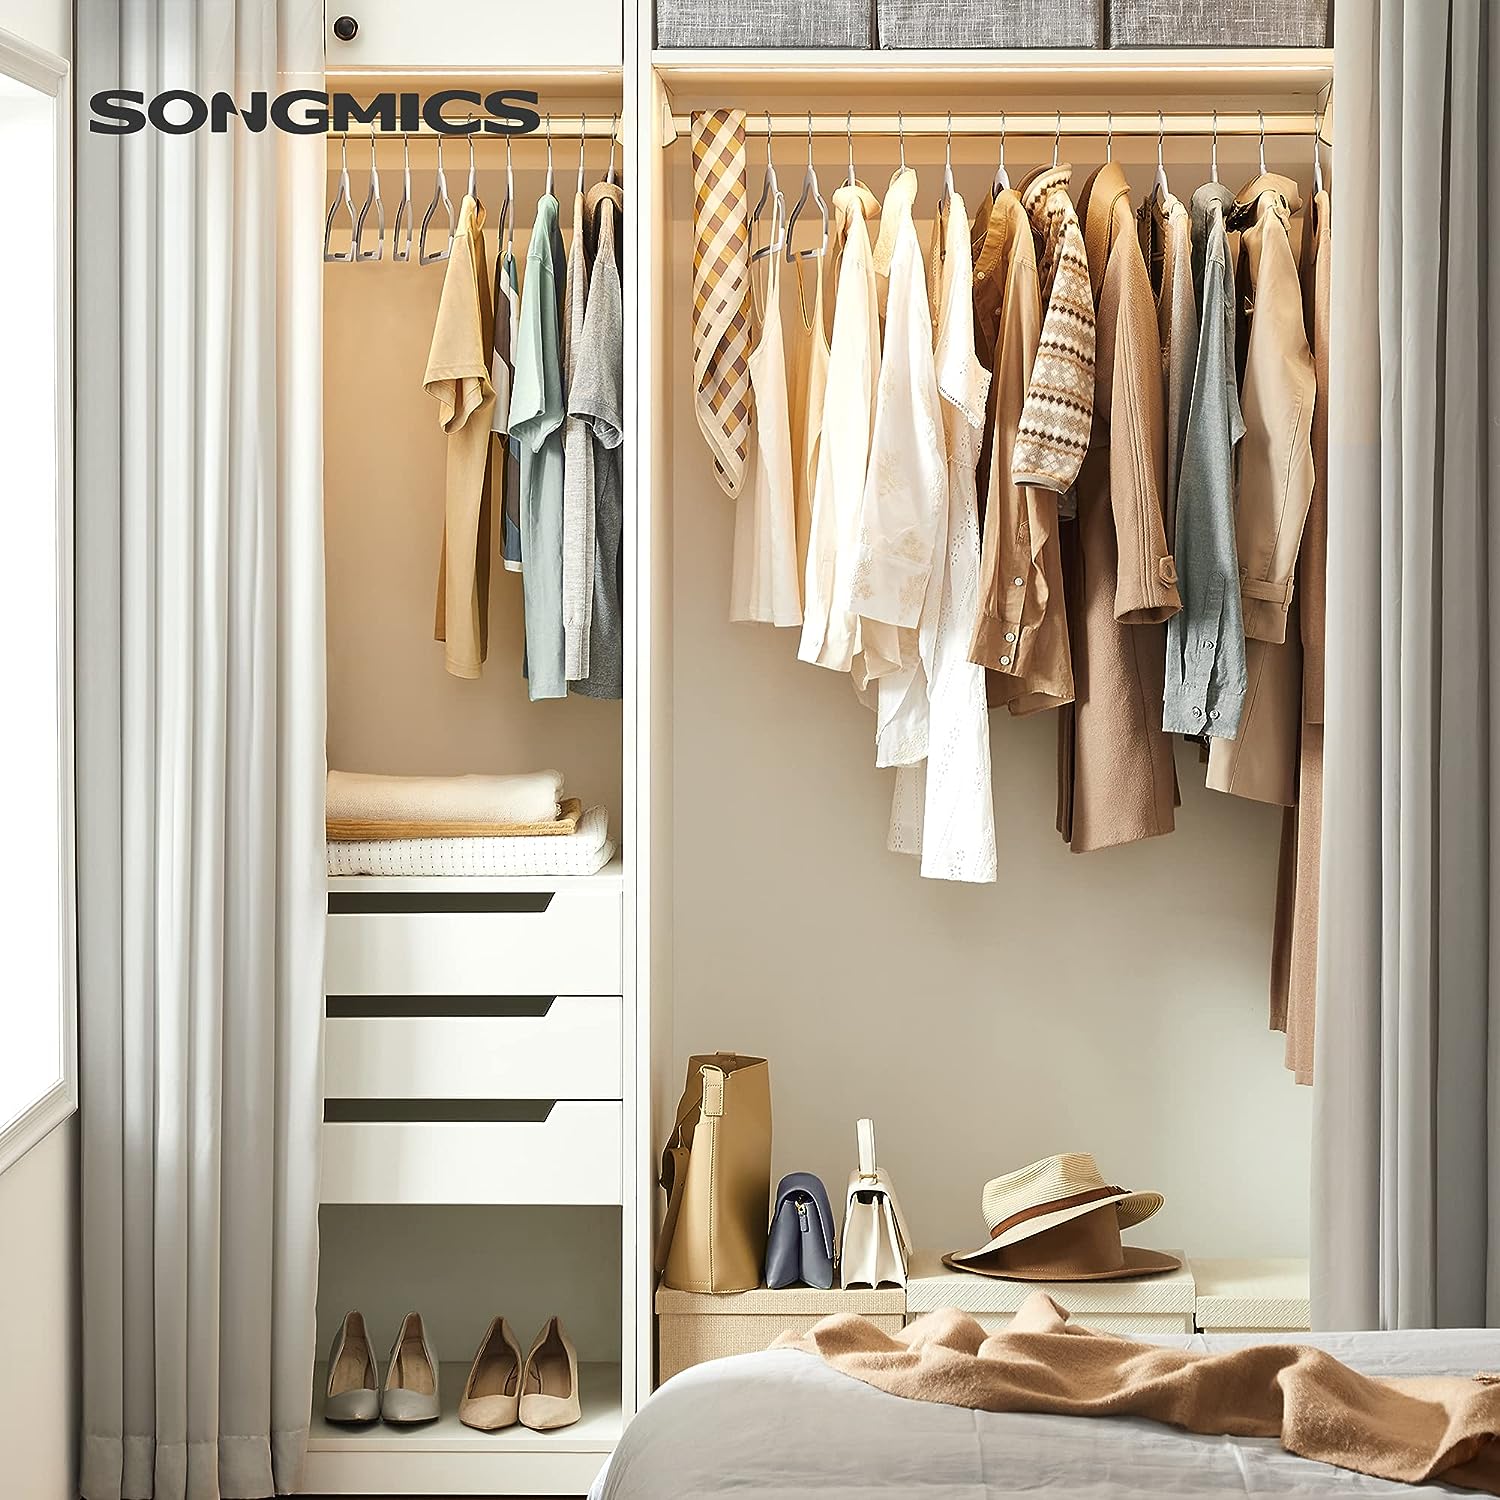 Songmics 50 Pack Coat Hangers Non-slip Clothes Hangers Space